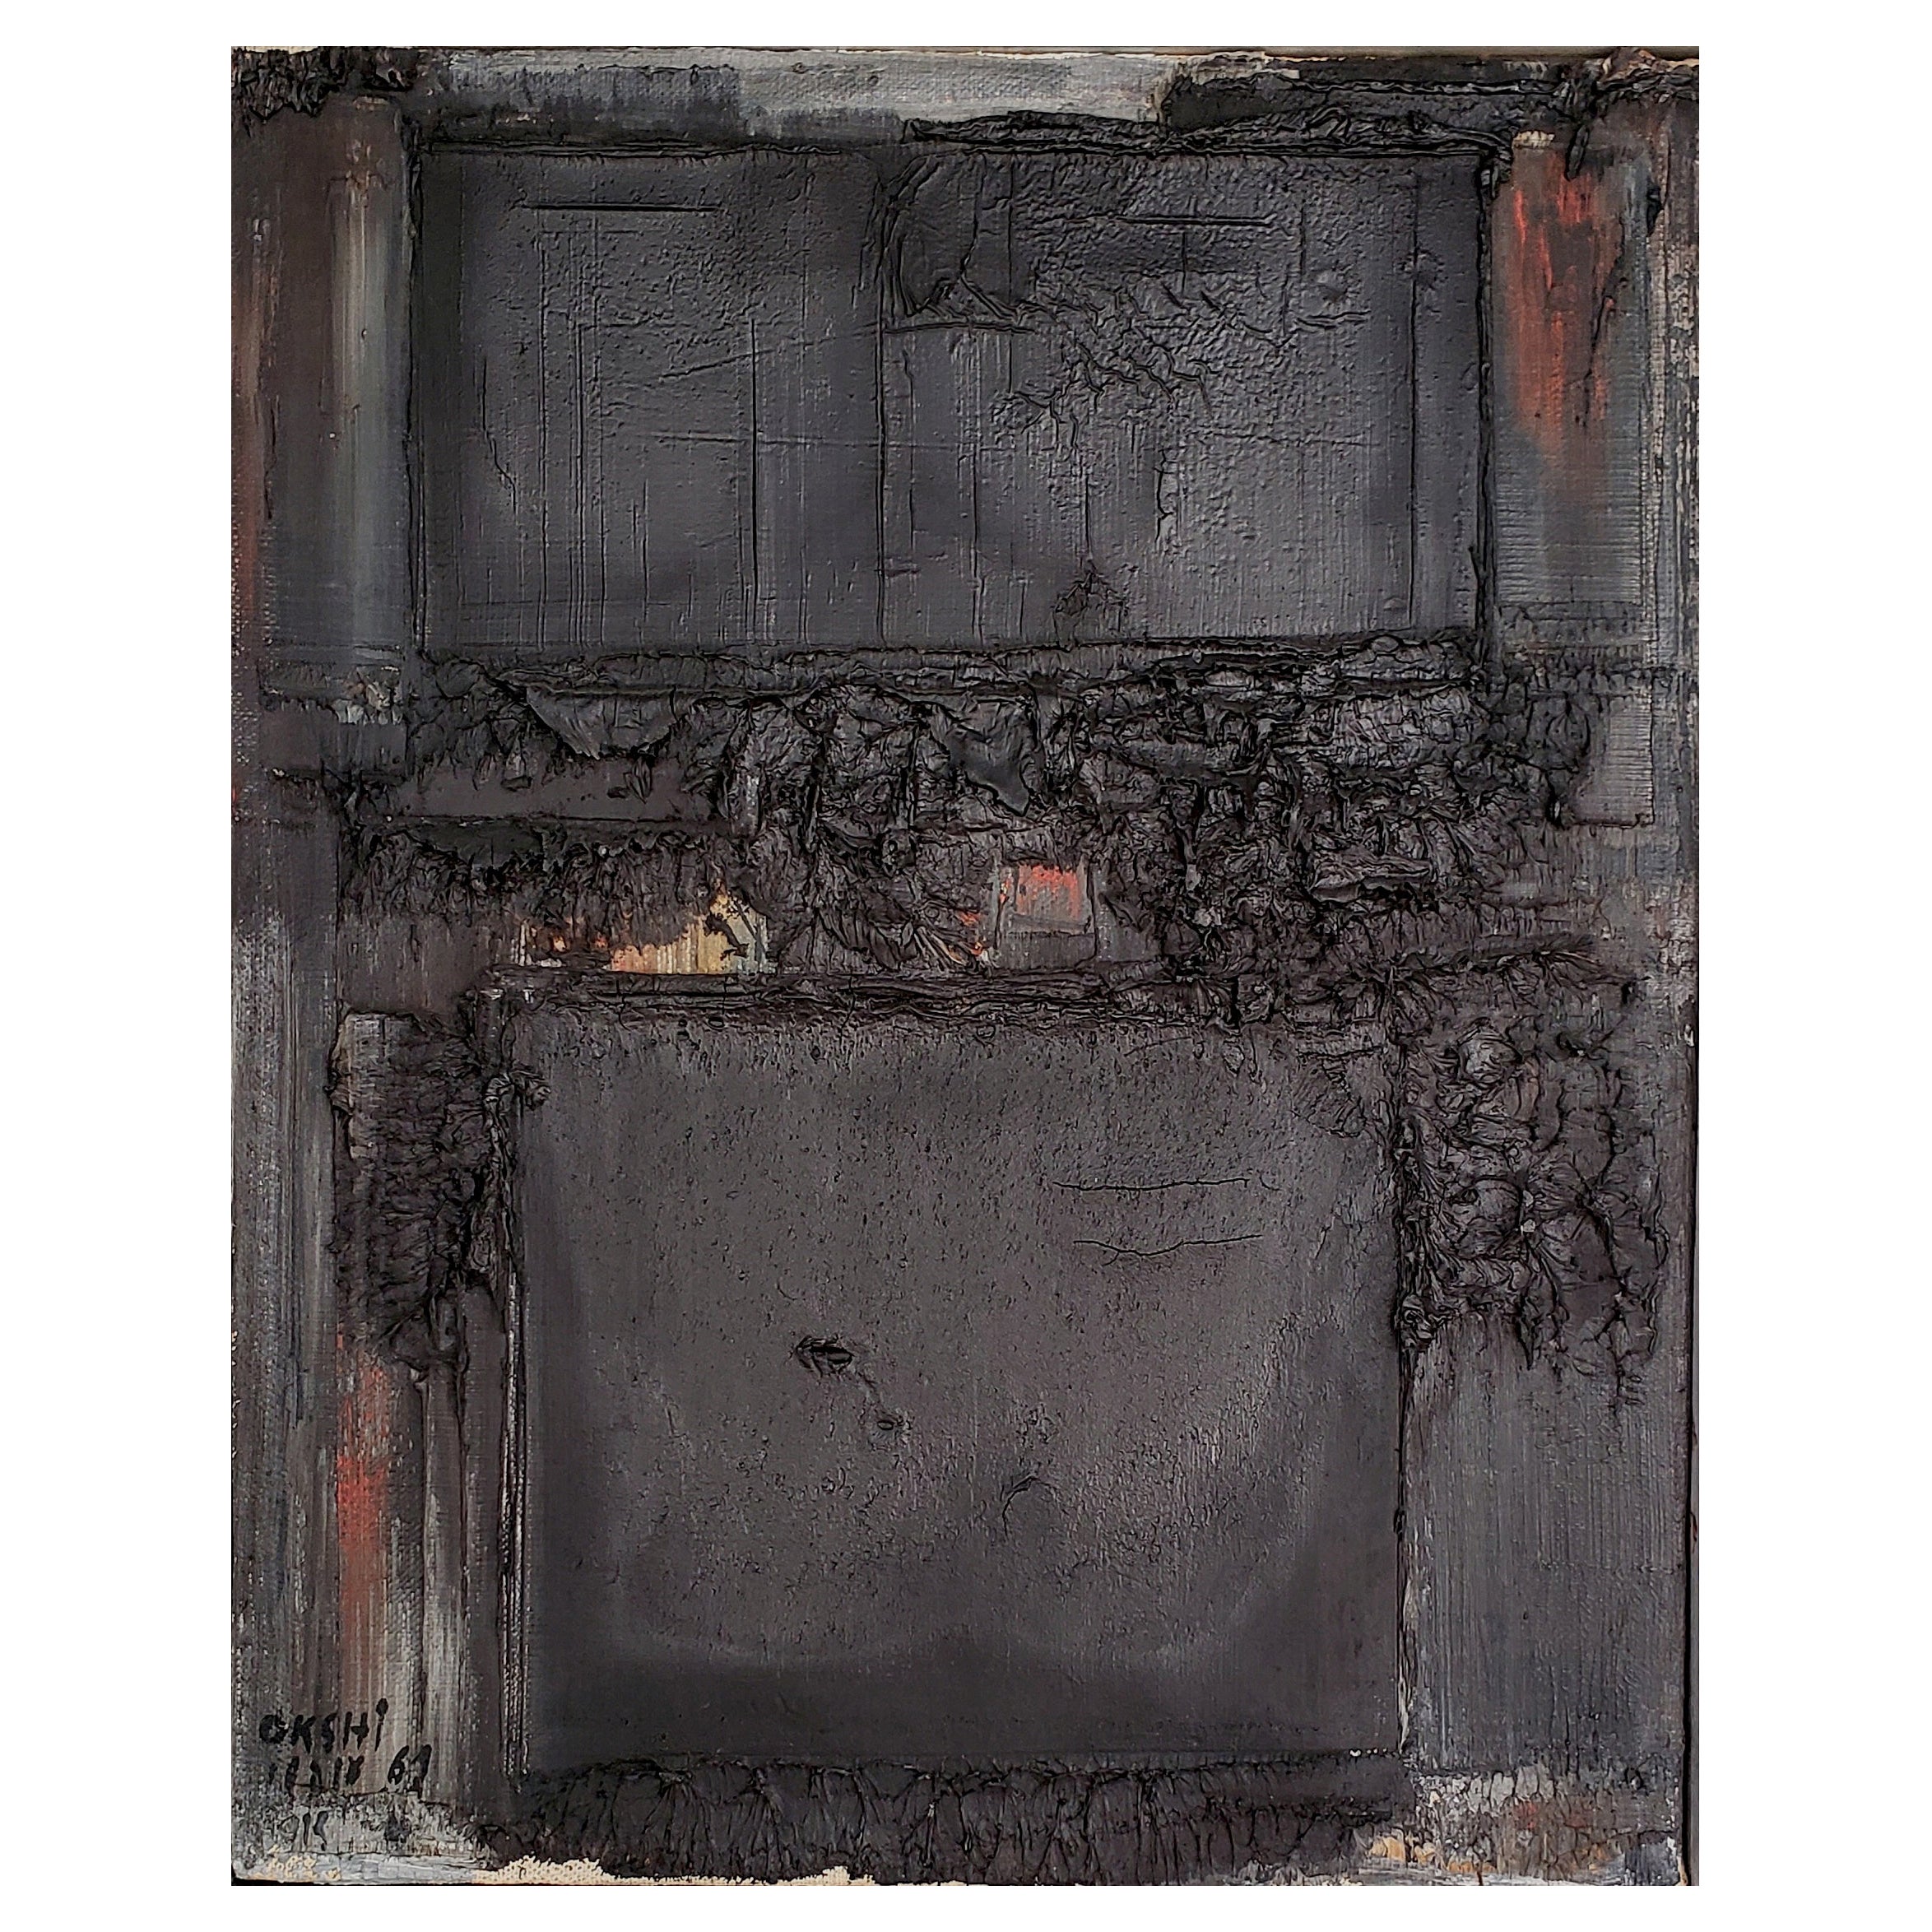 Avshalom Okashi: Abstrakte Komposition, Öl auf Leinwand, datiert 1961 im Angebot